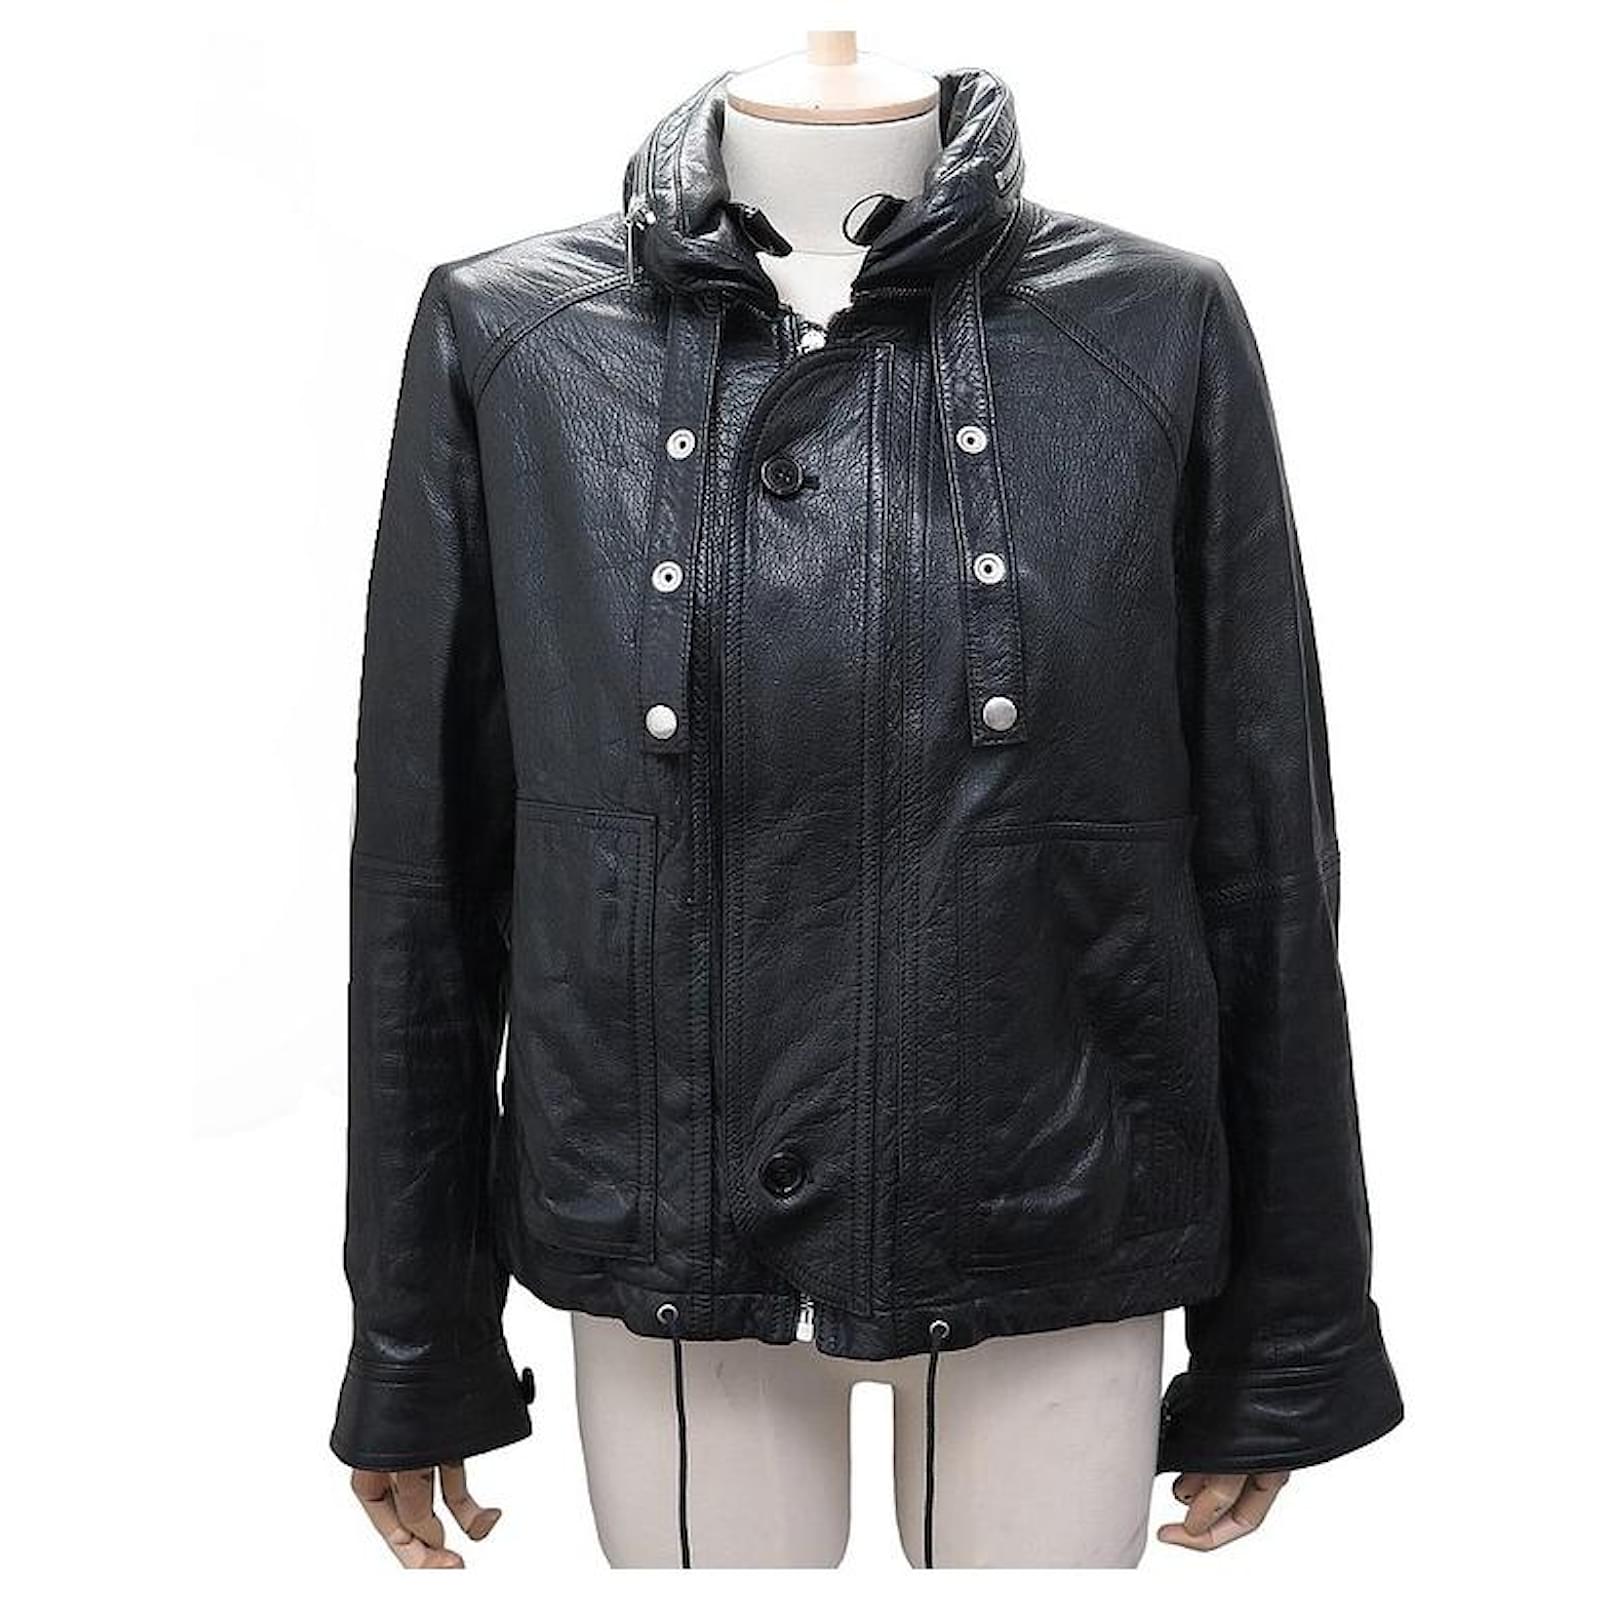 Saint Laurent, Jackets & Coats